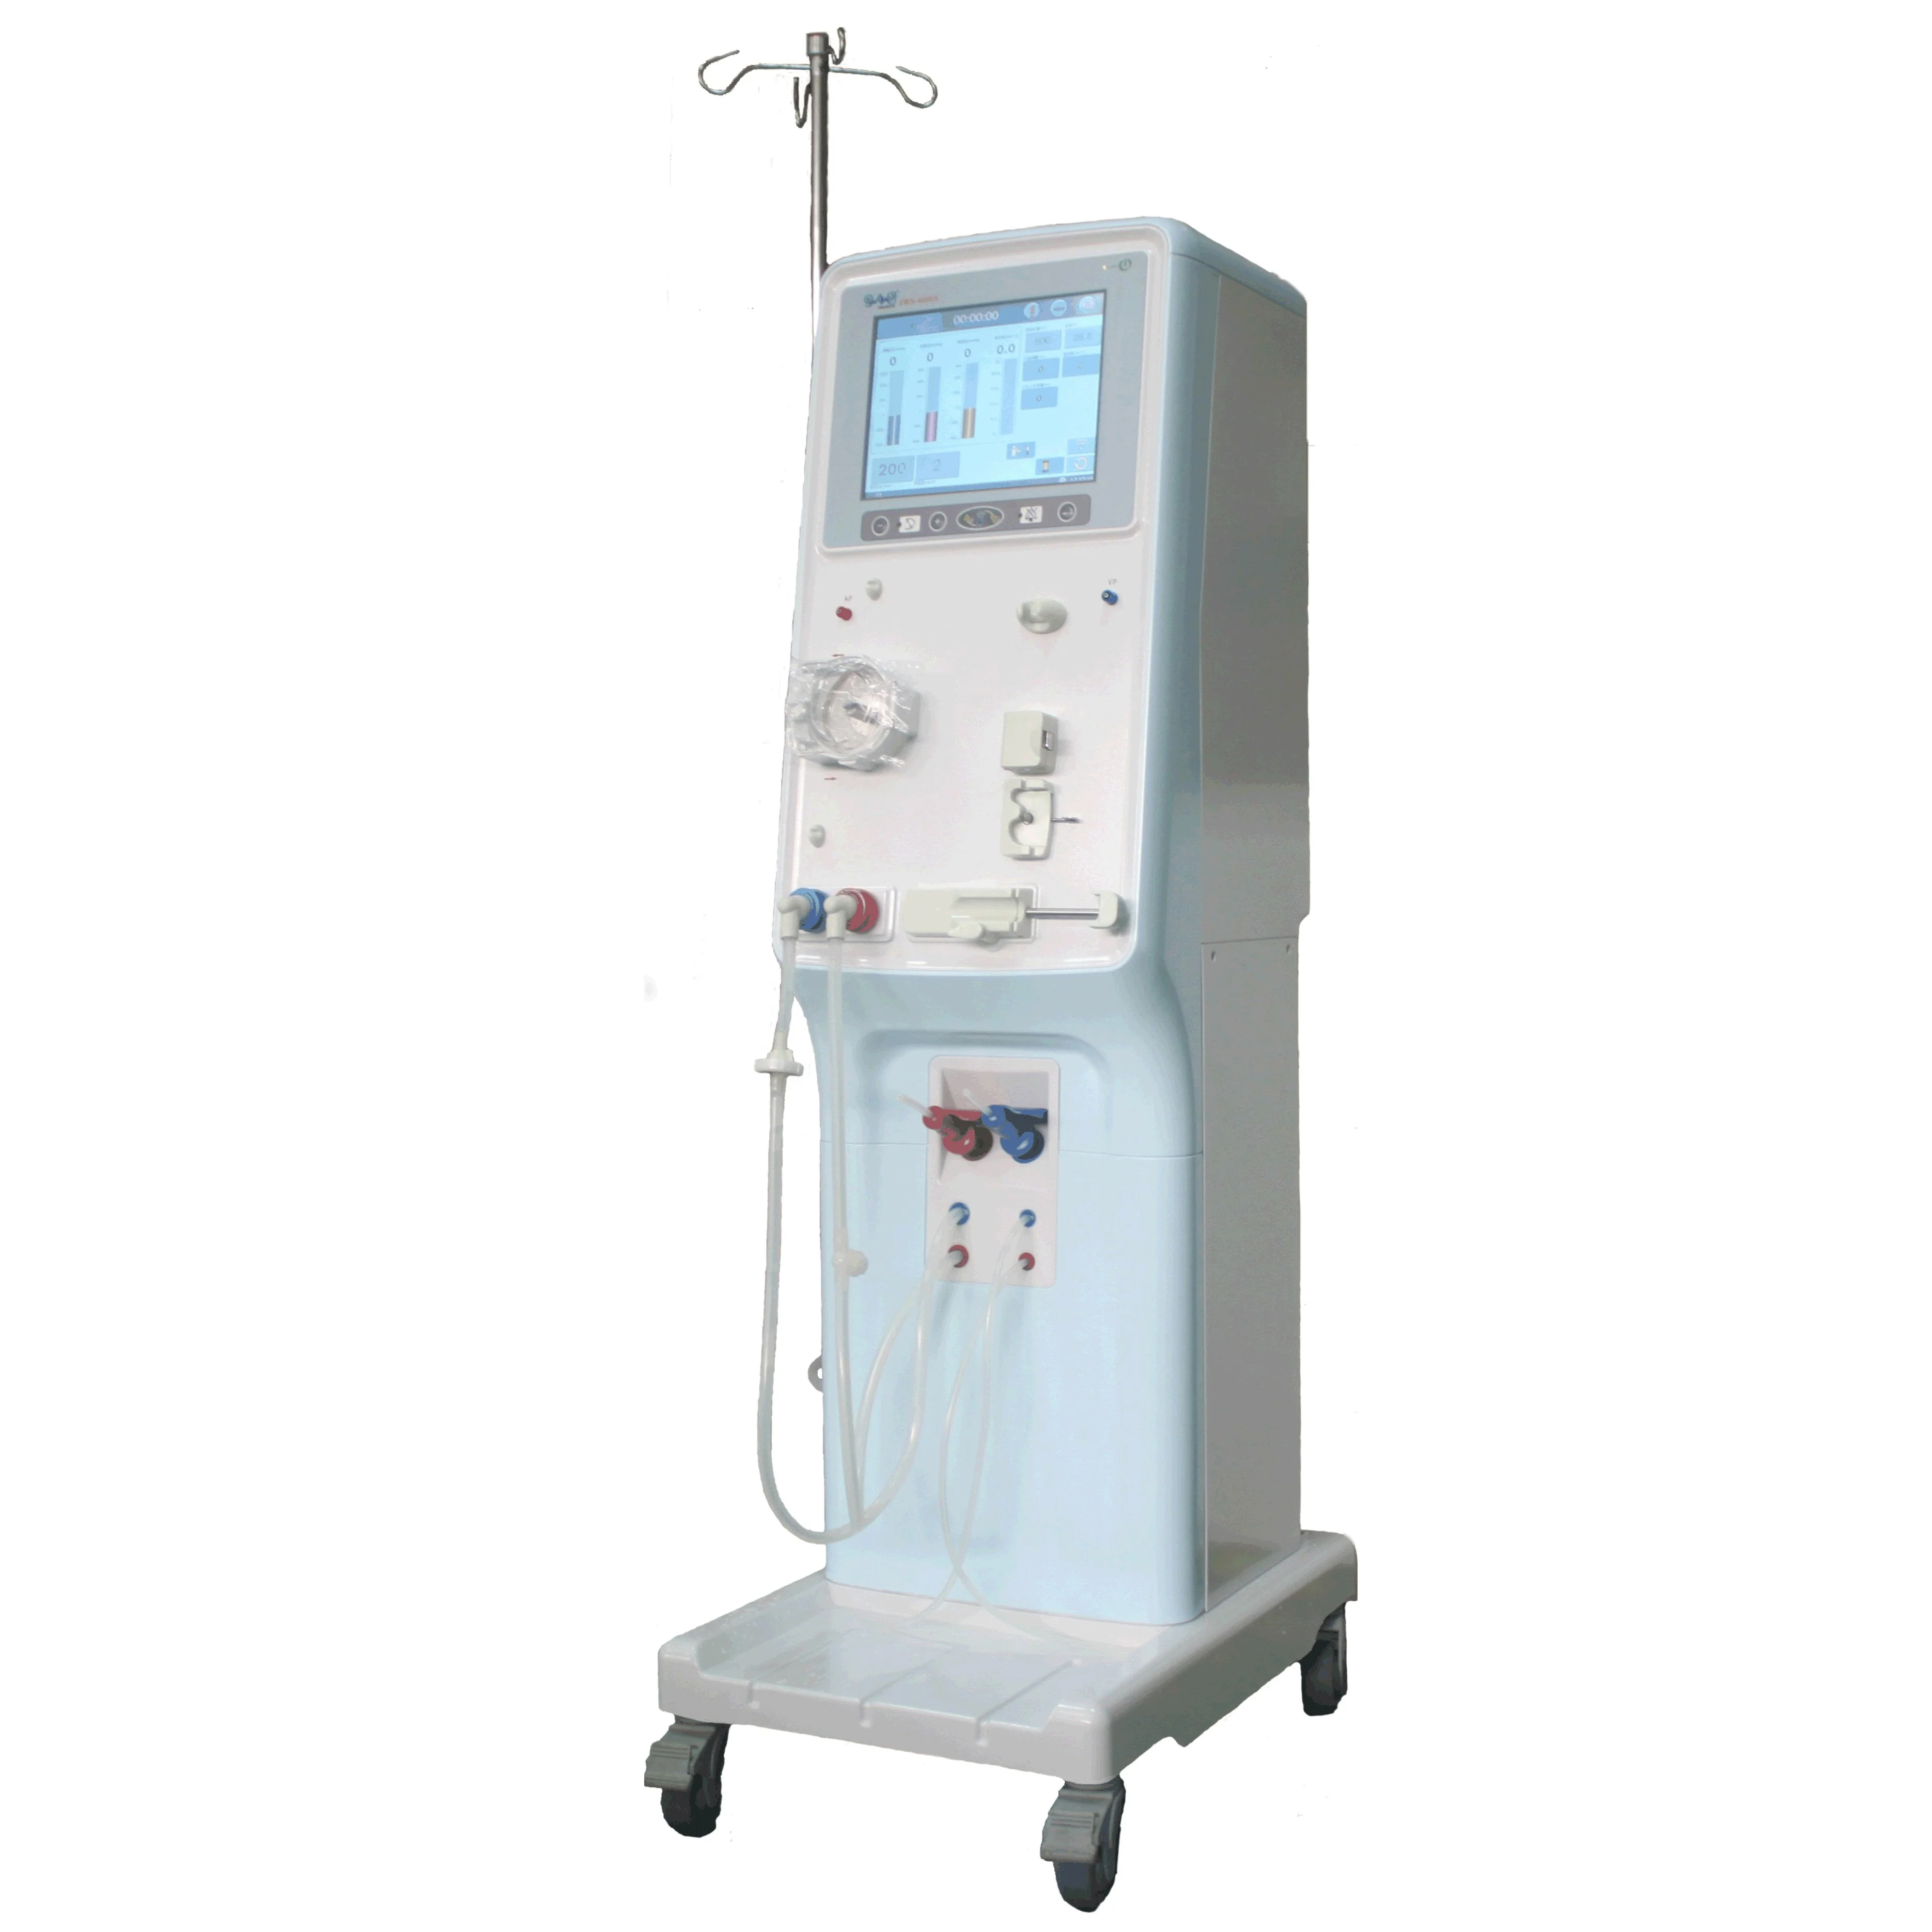 
FS-JH-2018 Dialysis Machine manufacturer 